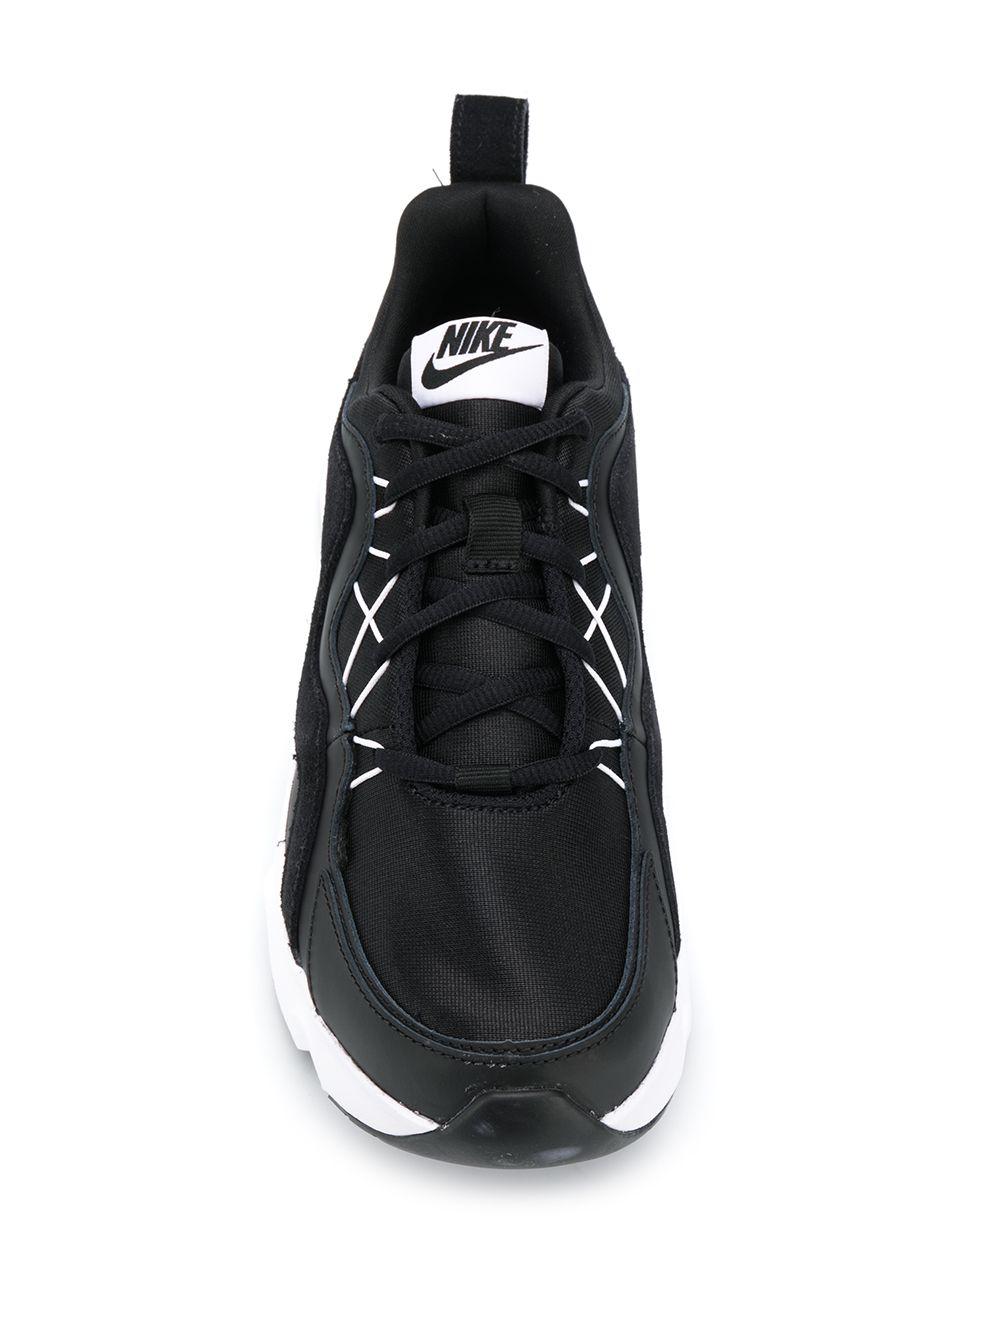 Nike Wmns Ryz 365 Trail Running Shoes in Black | Lyst